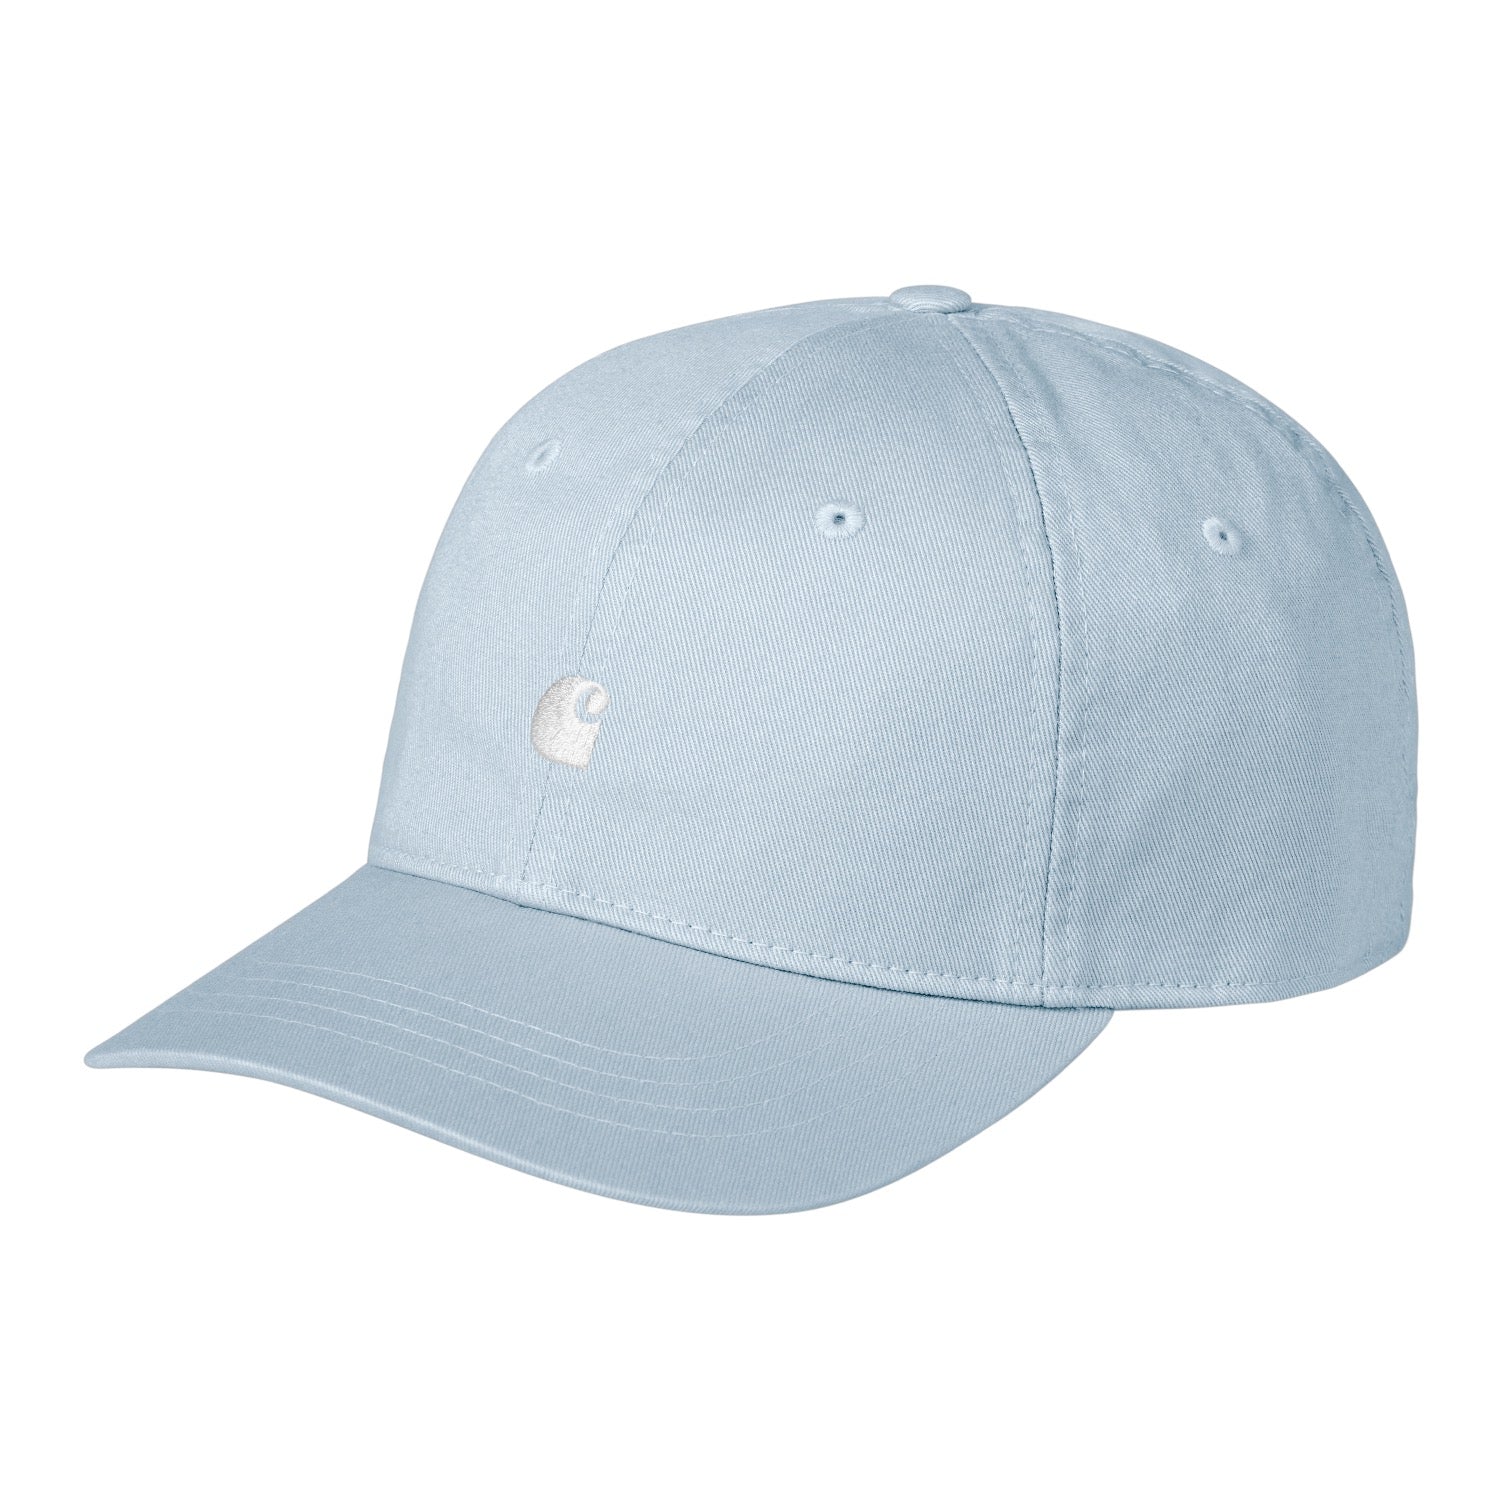 MADISON LOGO CAP - Frosted Blue / White